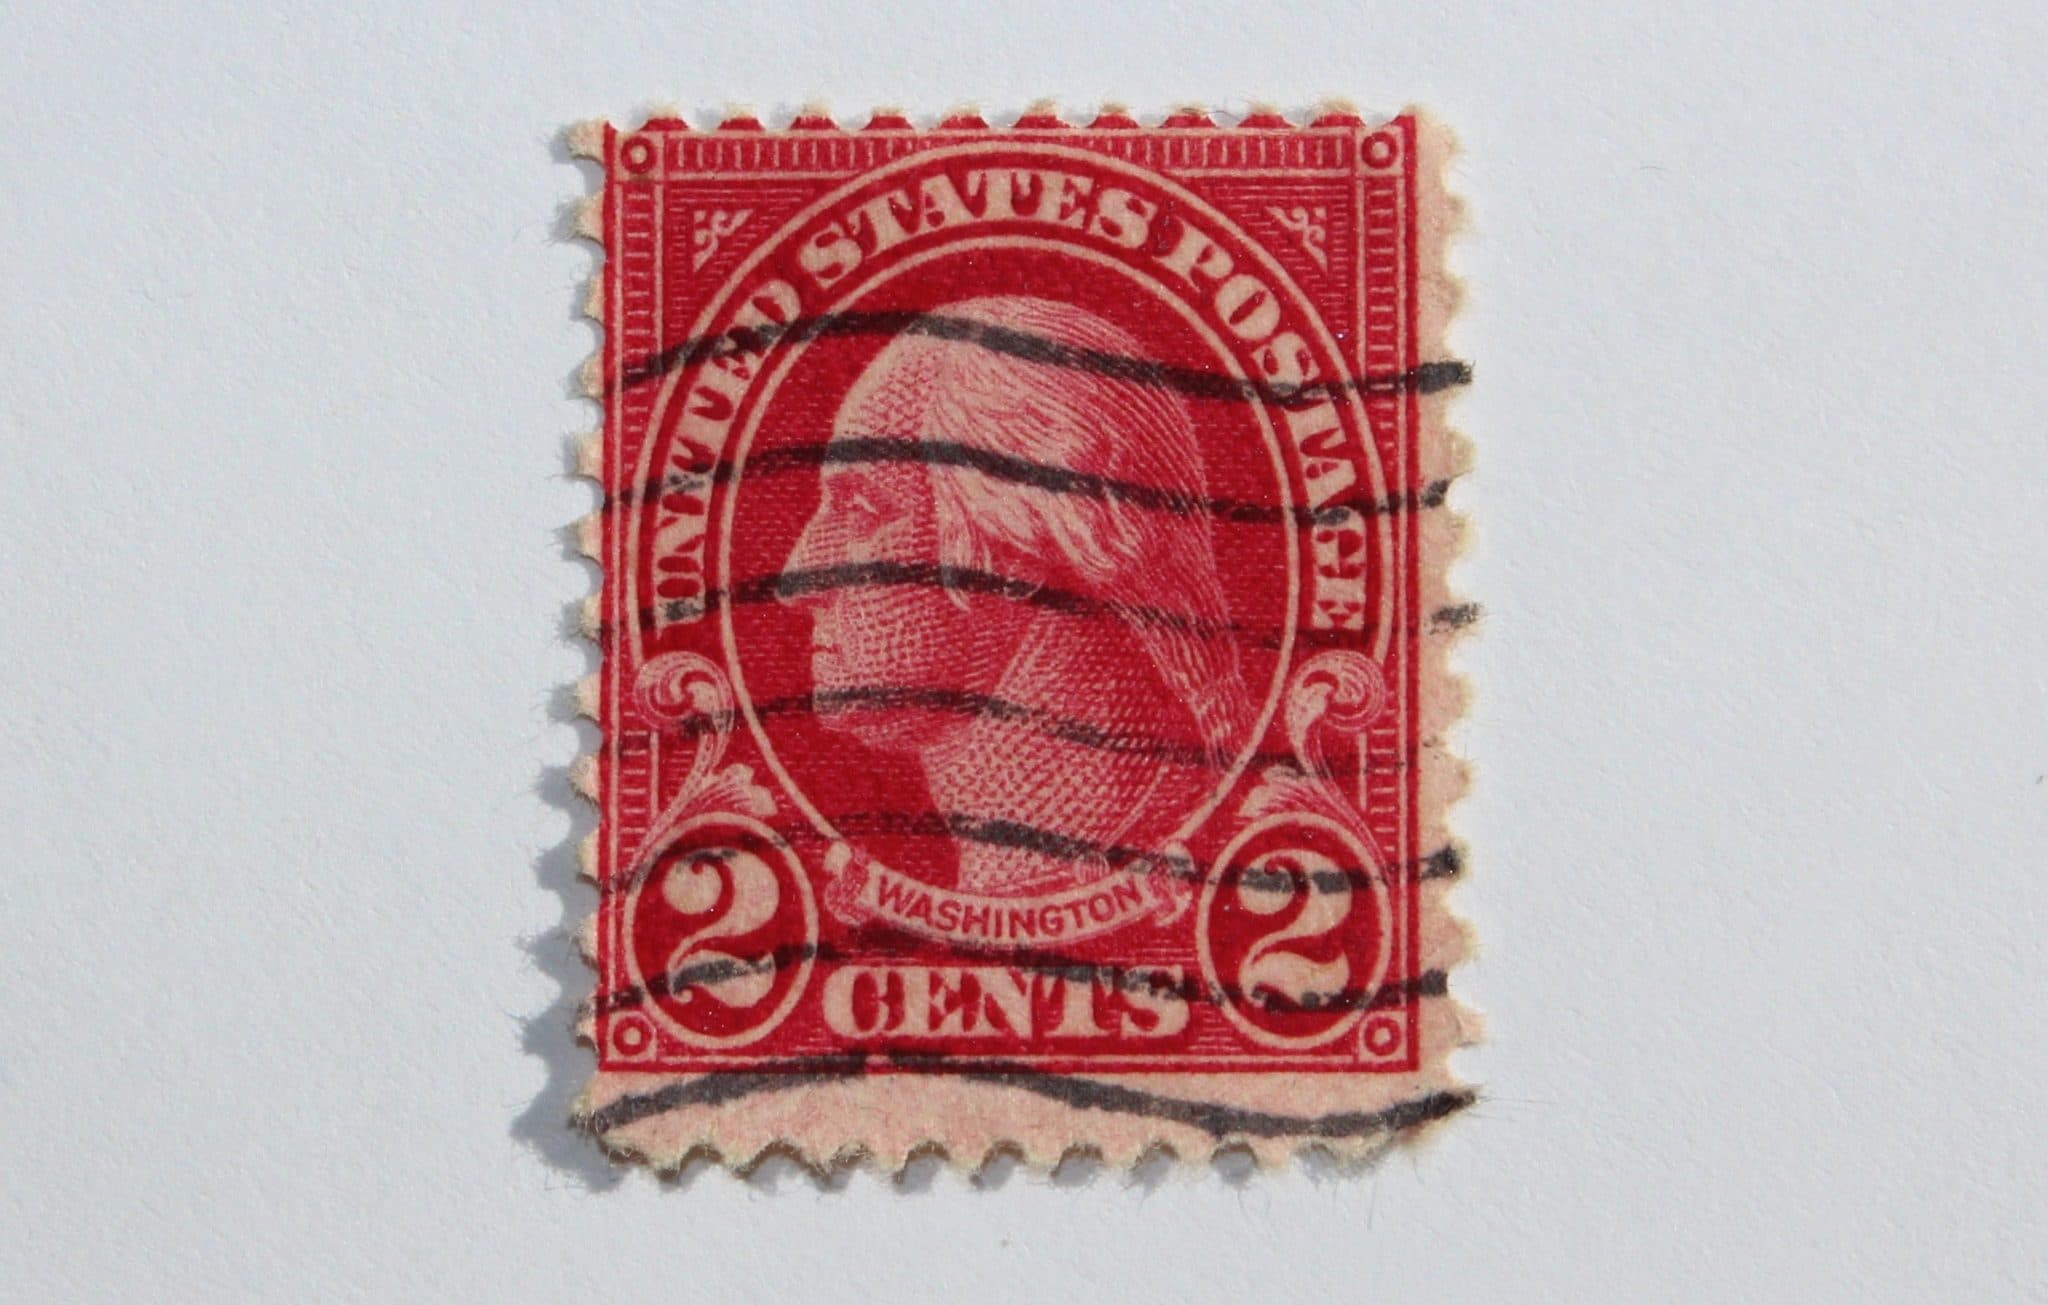 Authentic stamp of George Washington (USA)